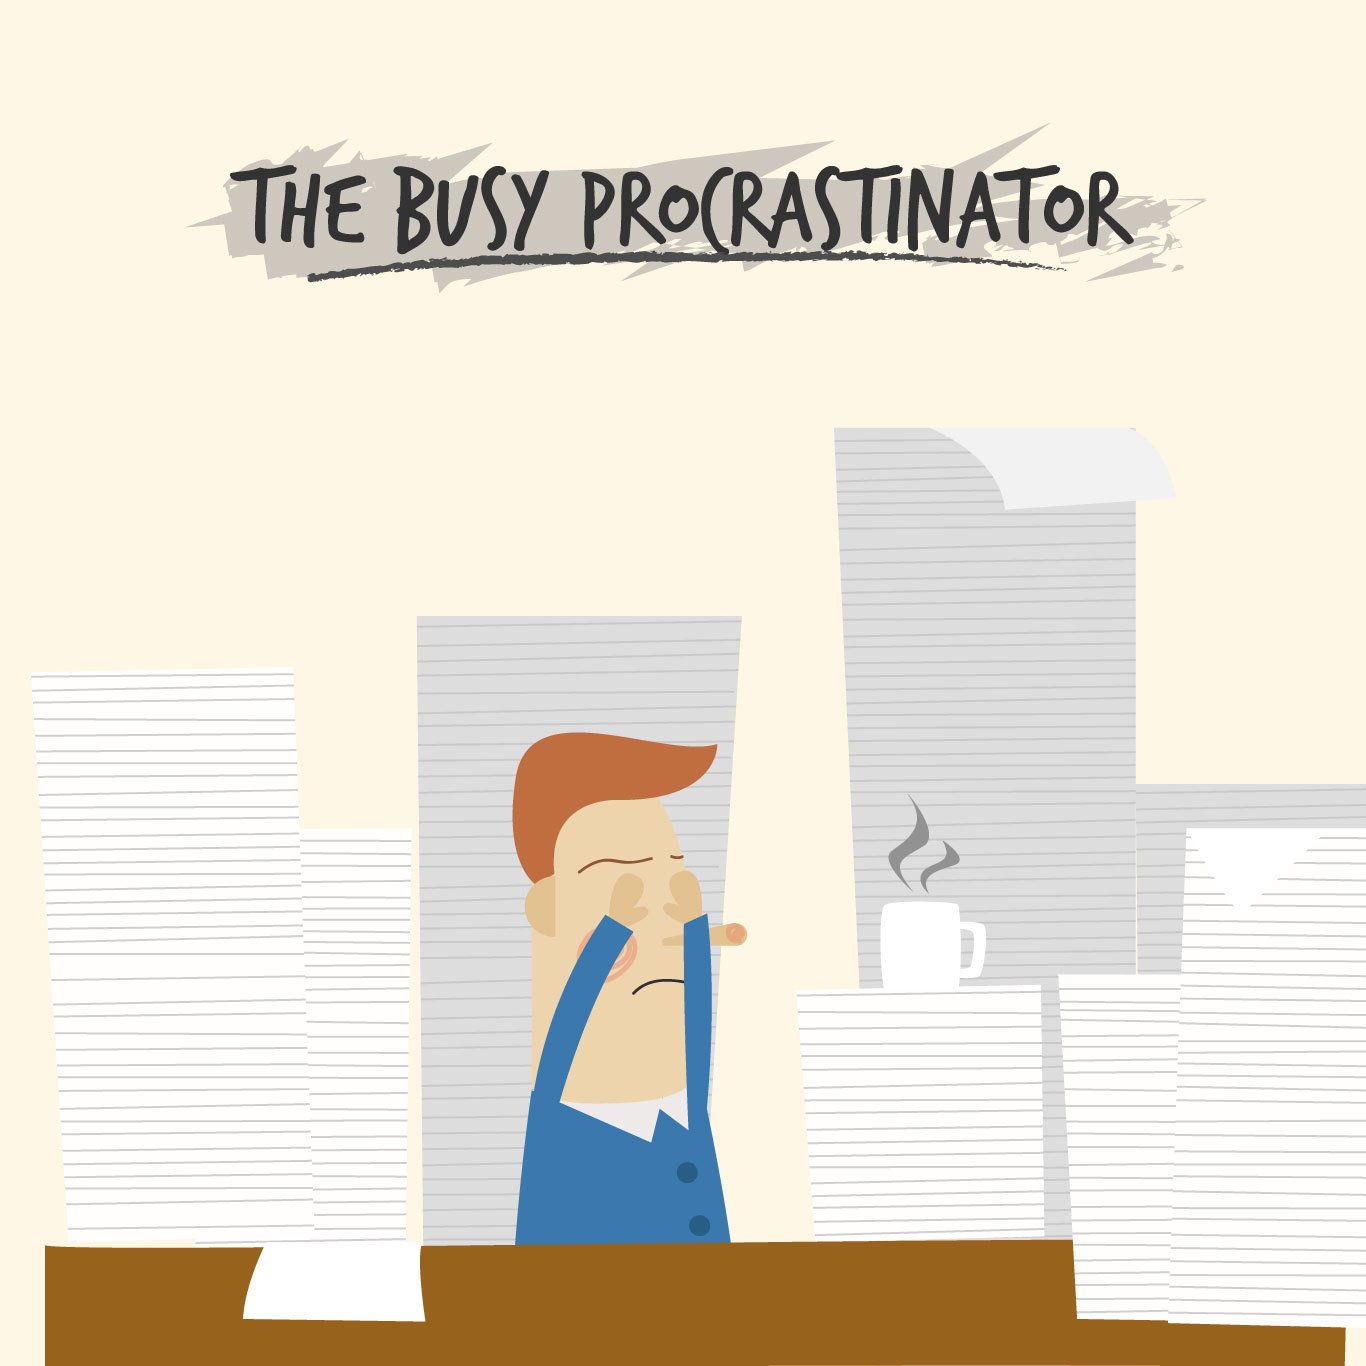 The busy procrastinator